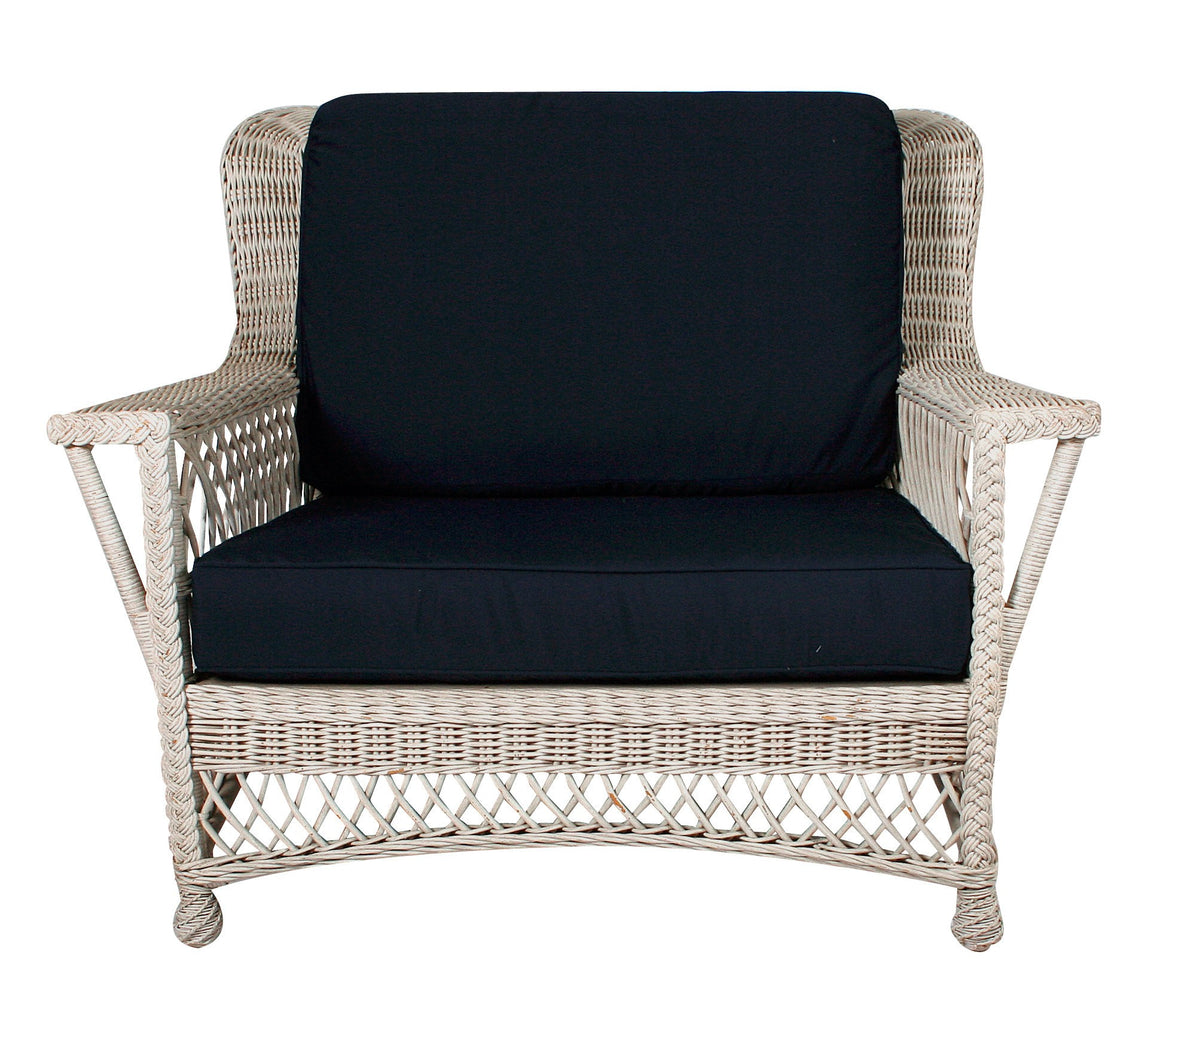 Designer Wicker &amp; Rattan By Tribor Rockport Chair and a Half by Designer Wicker from Tribor Chair - Rattan Imports